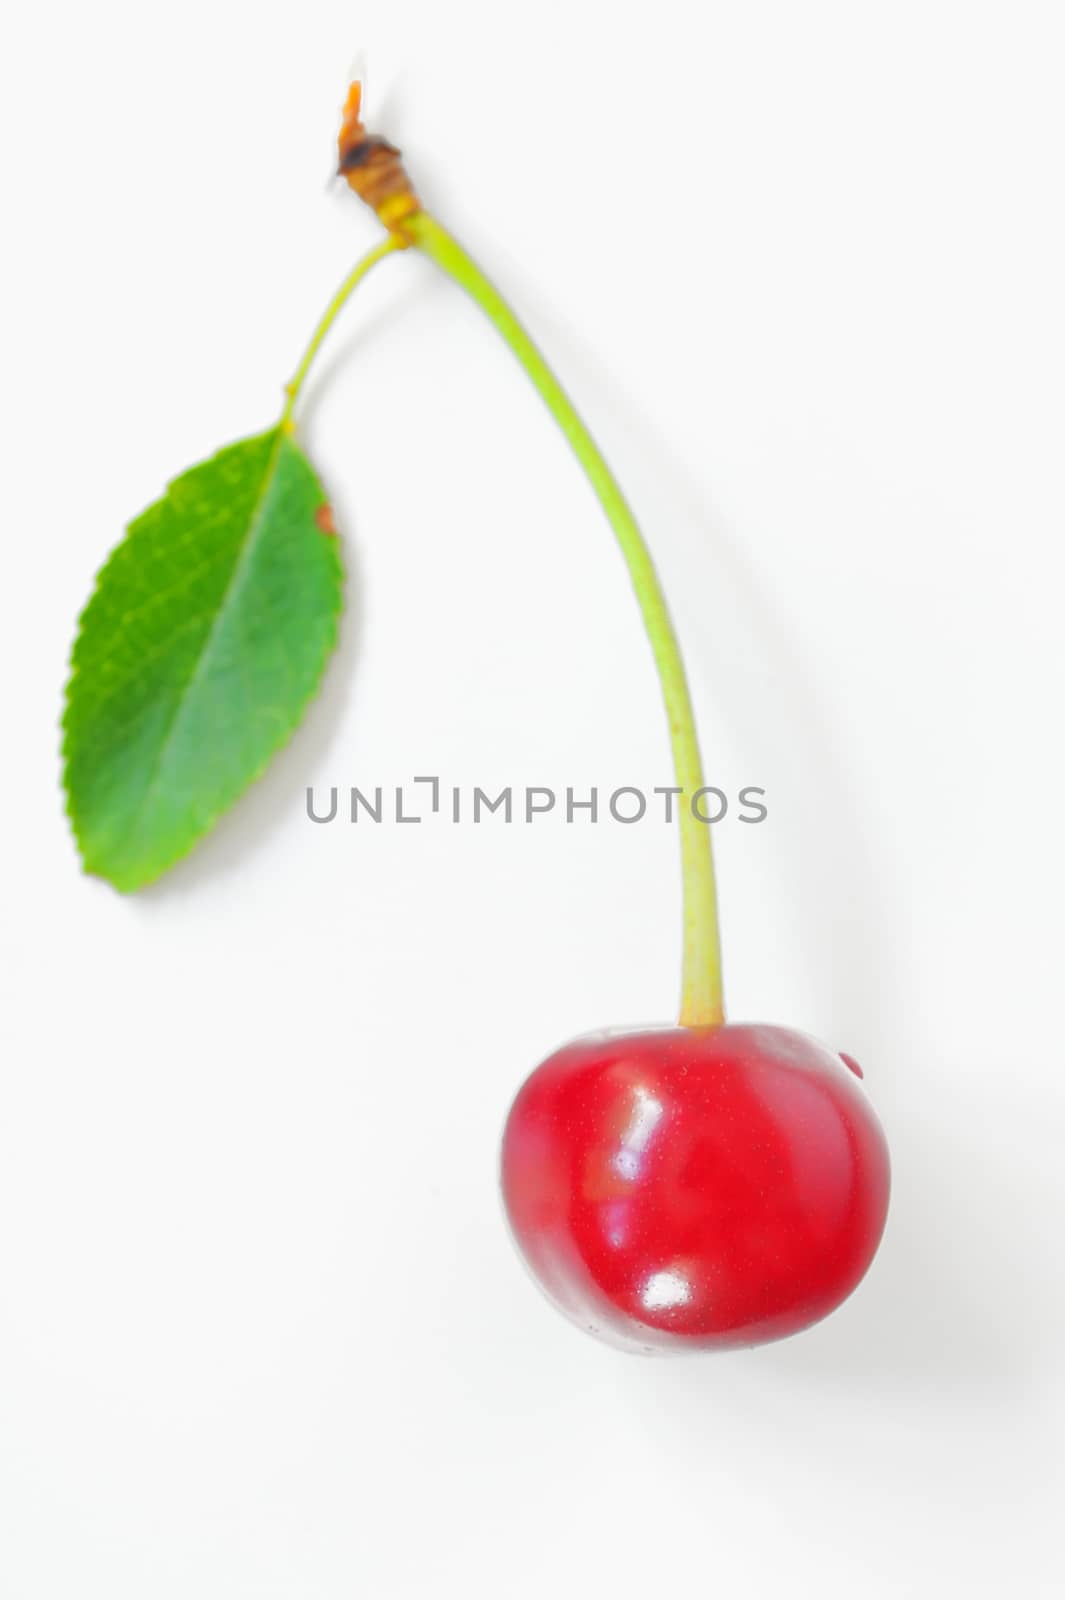 ripen cherries on a white background